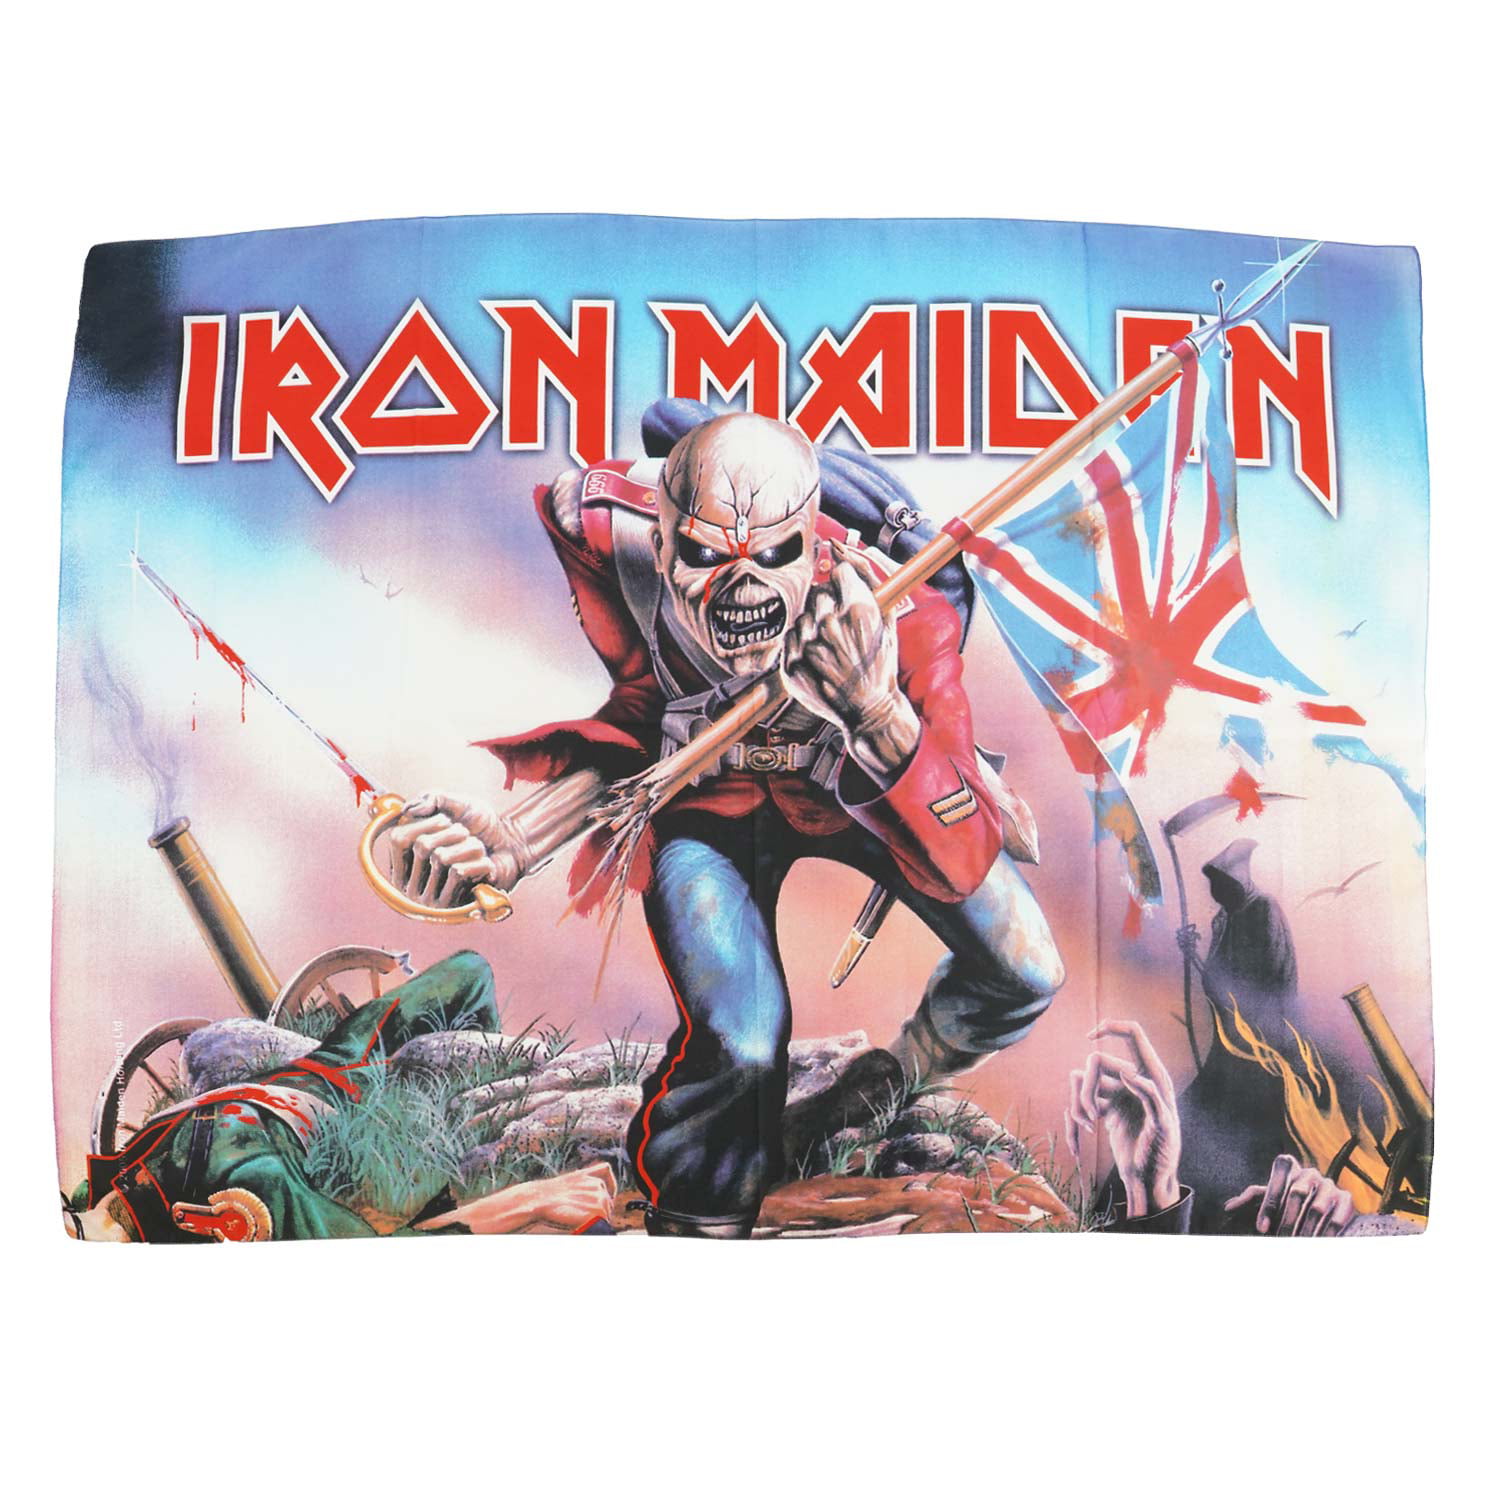 Iron Maiden Poster Flag - Walmart.com - Walmart.com